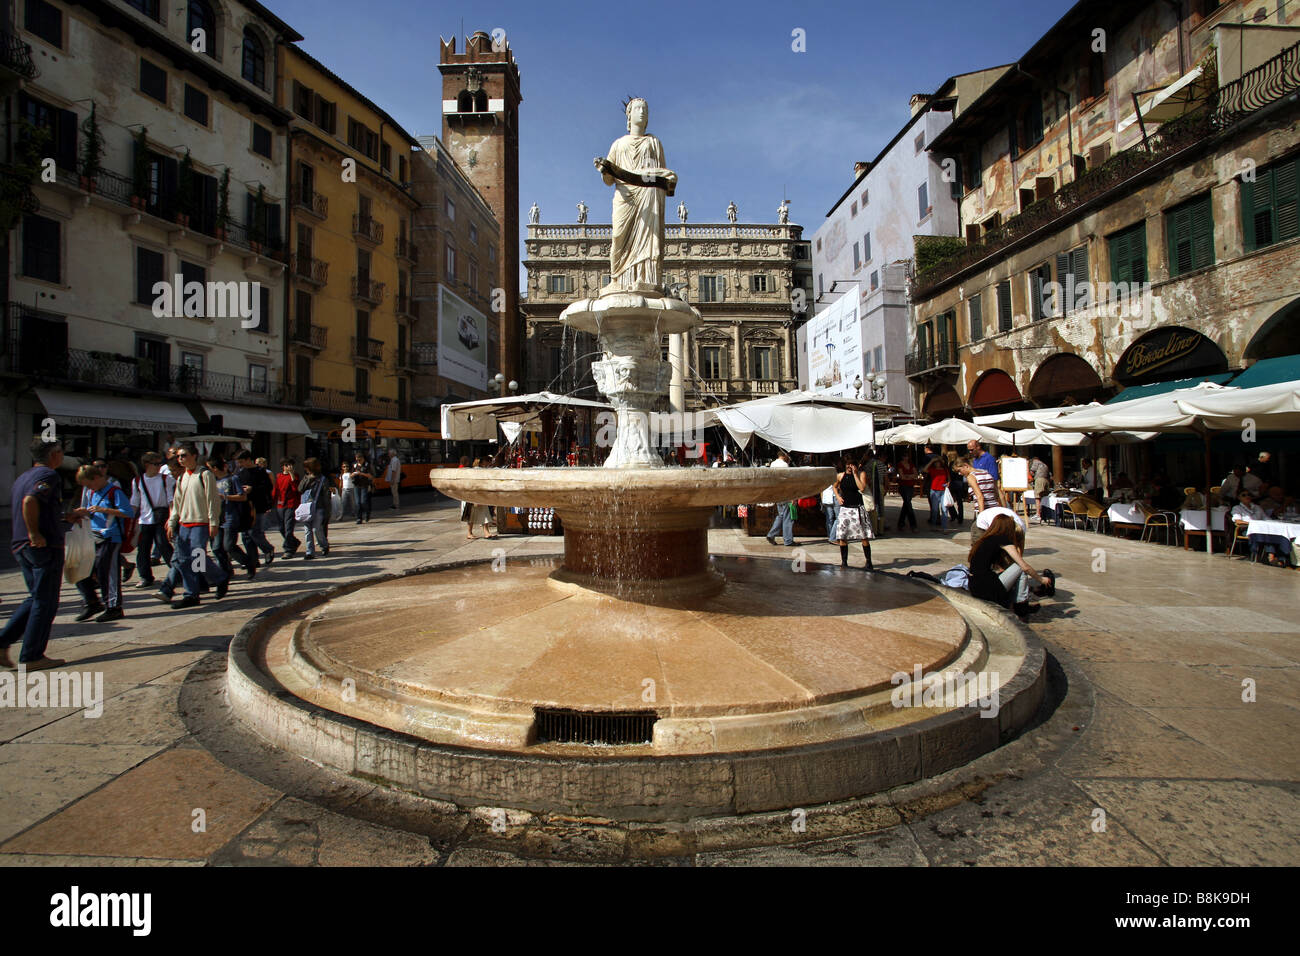 Madonna Verona, Brunnen, Piazza Delle Erbe, Verona, Veneto, Italien  Stockfotografie - Alamy